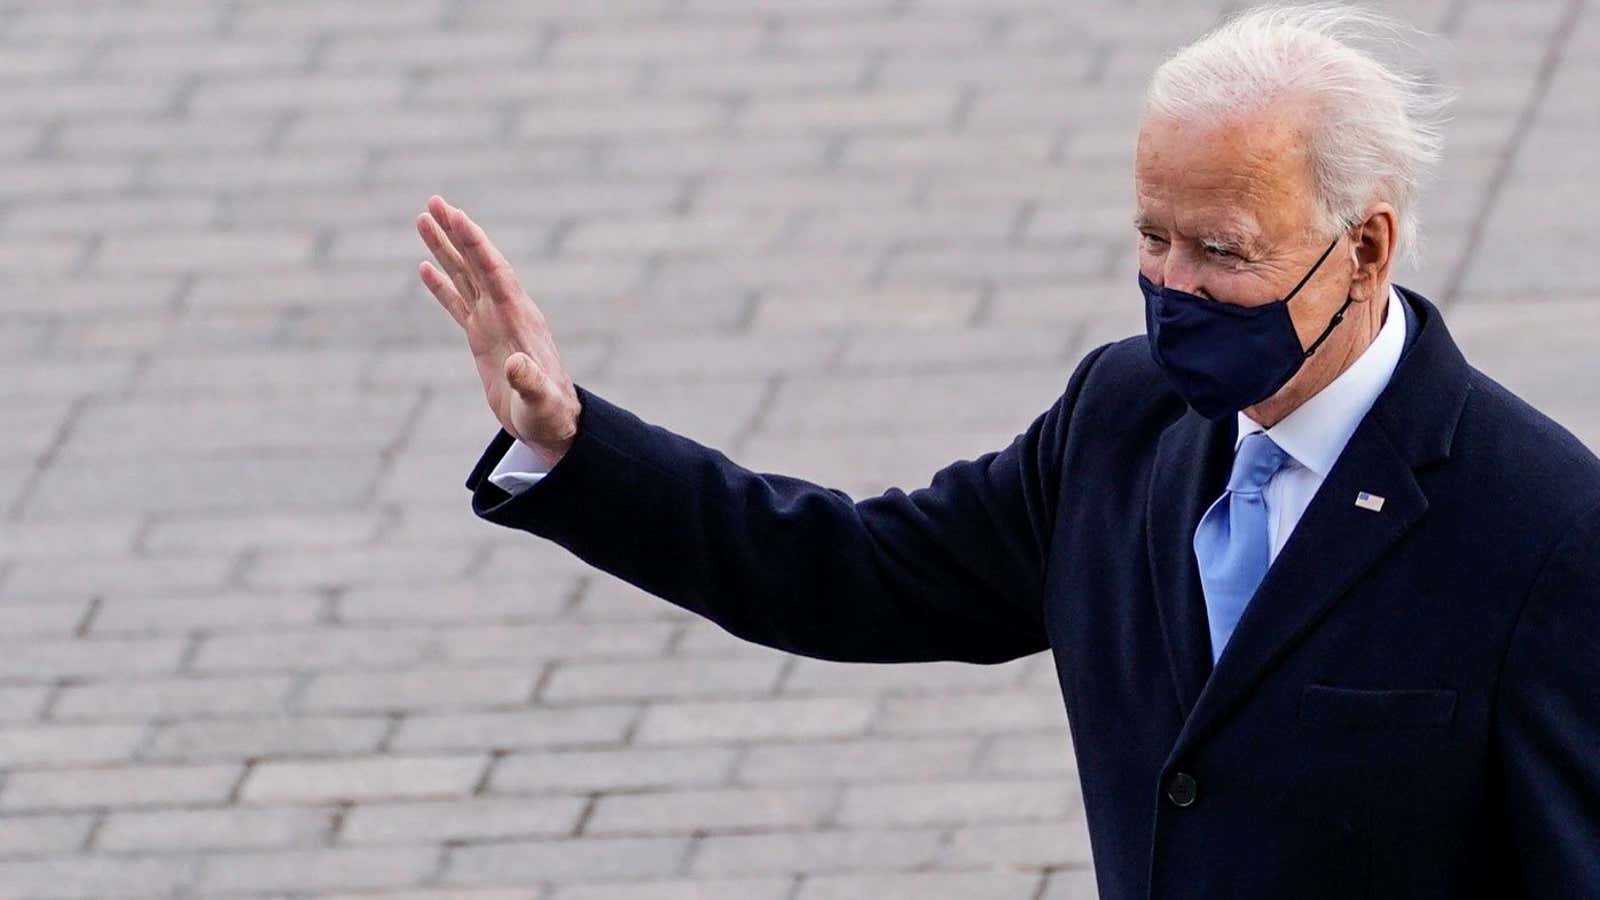 A big day for Joe Biden’s right hand.